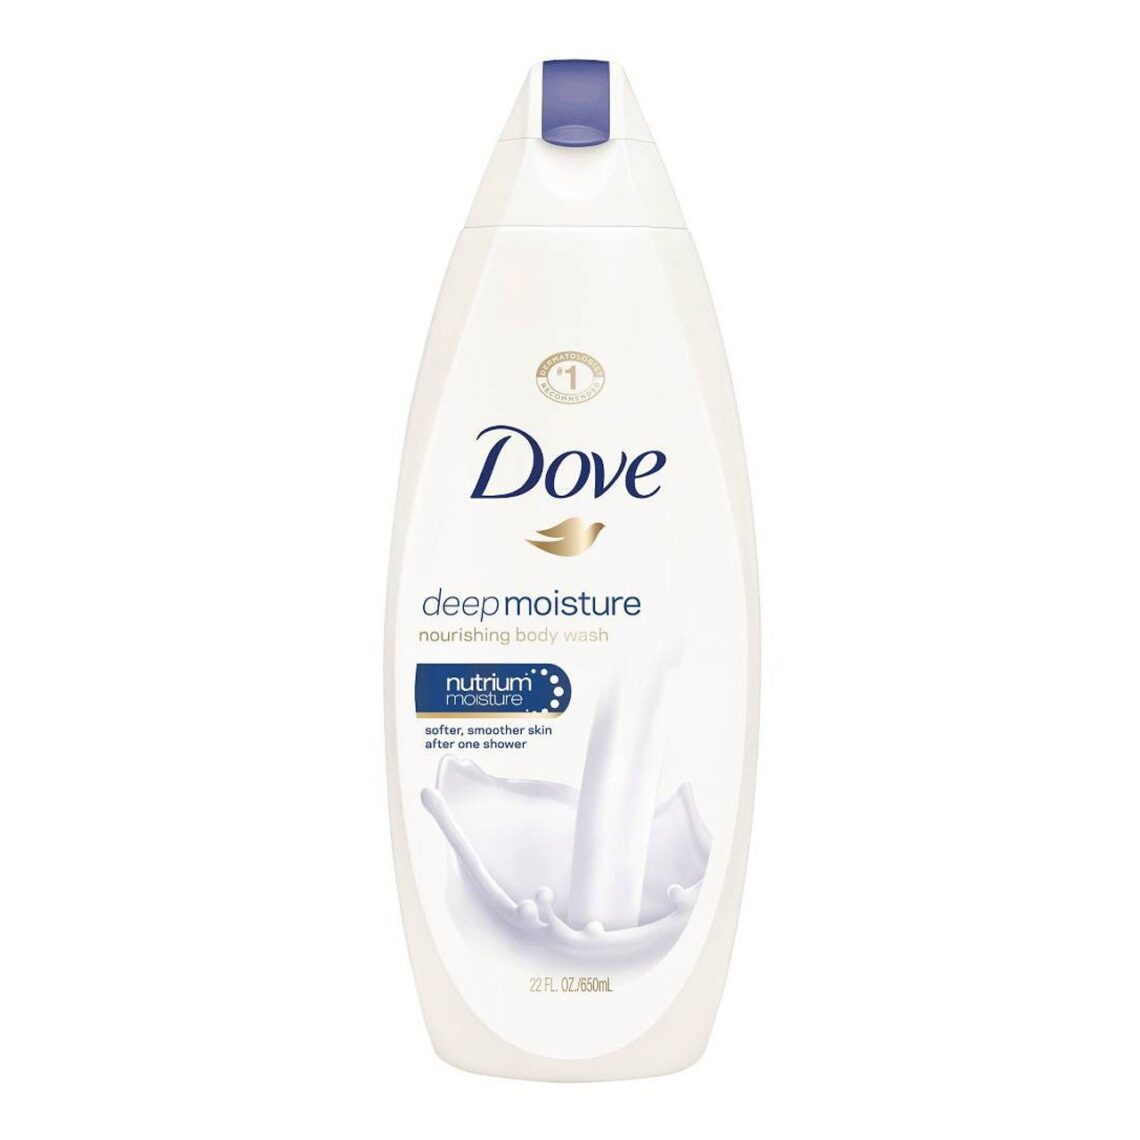 Dove deep moisture body wash review